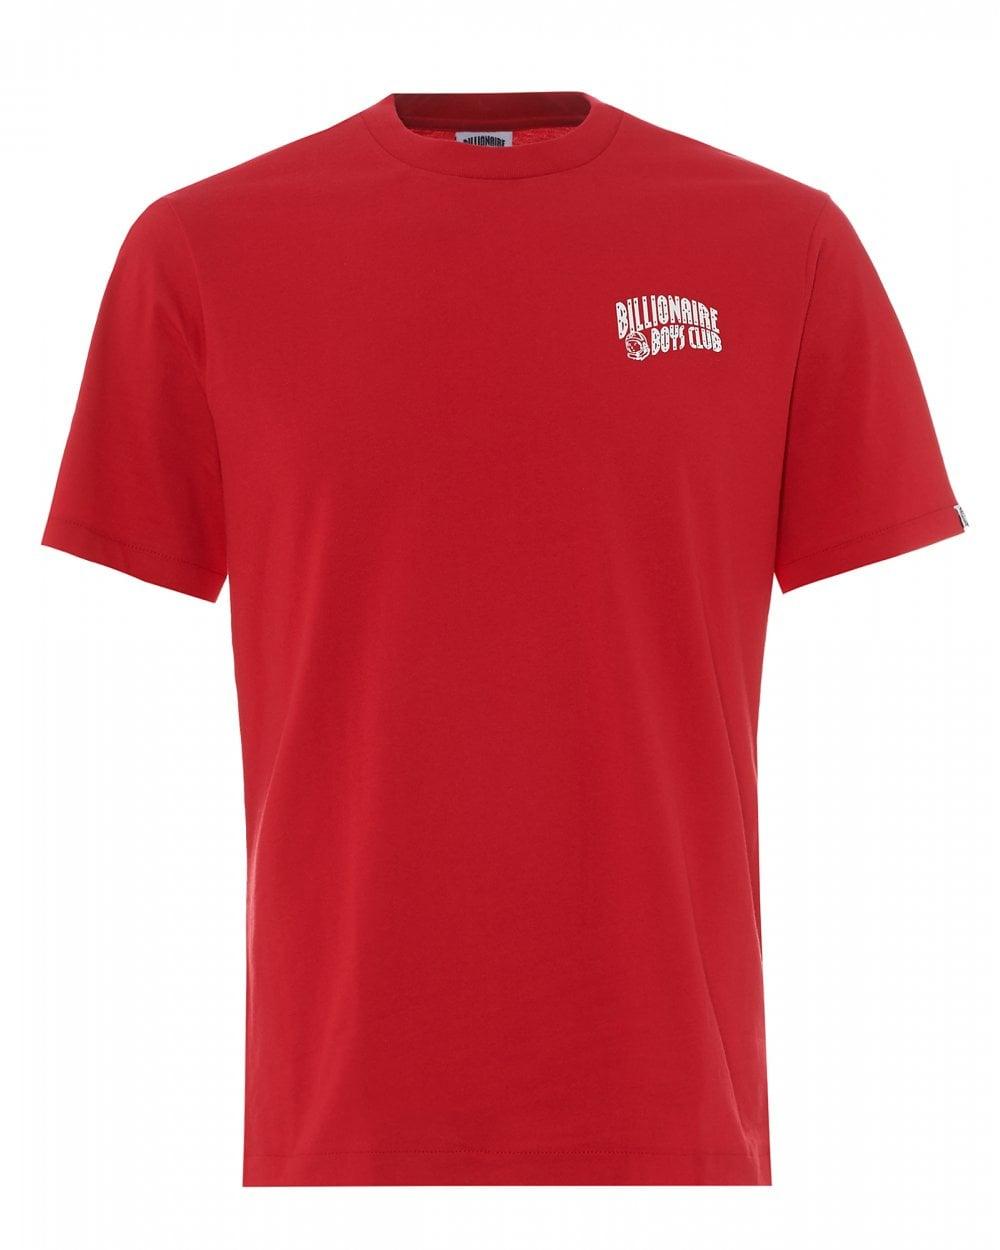 Red Arch Logo - Billionaire Boys Club Mens Arch Logo T Shirt, Red Regular Fit Tee